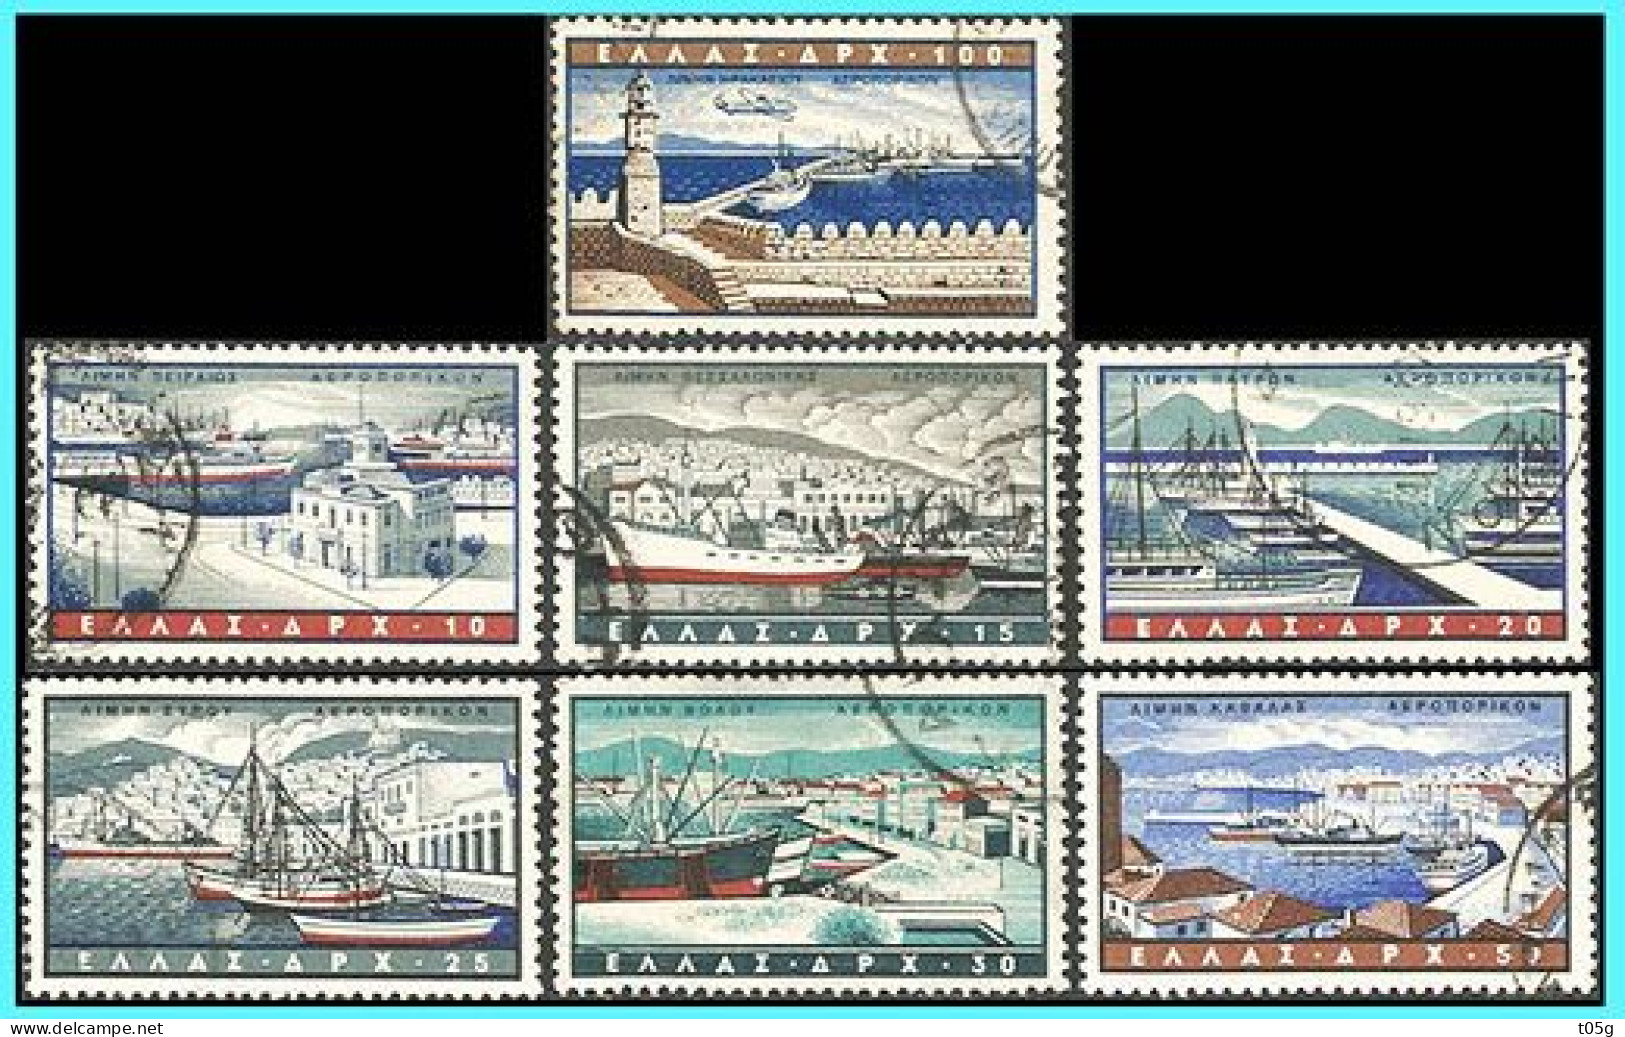 GREECE- GRECE - HELLAS 1958: Airpost Stamps: "Ports" Compl. Set Used - Gebruikt